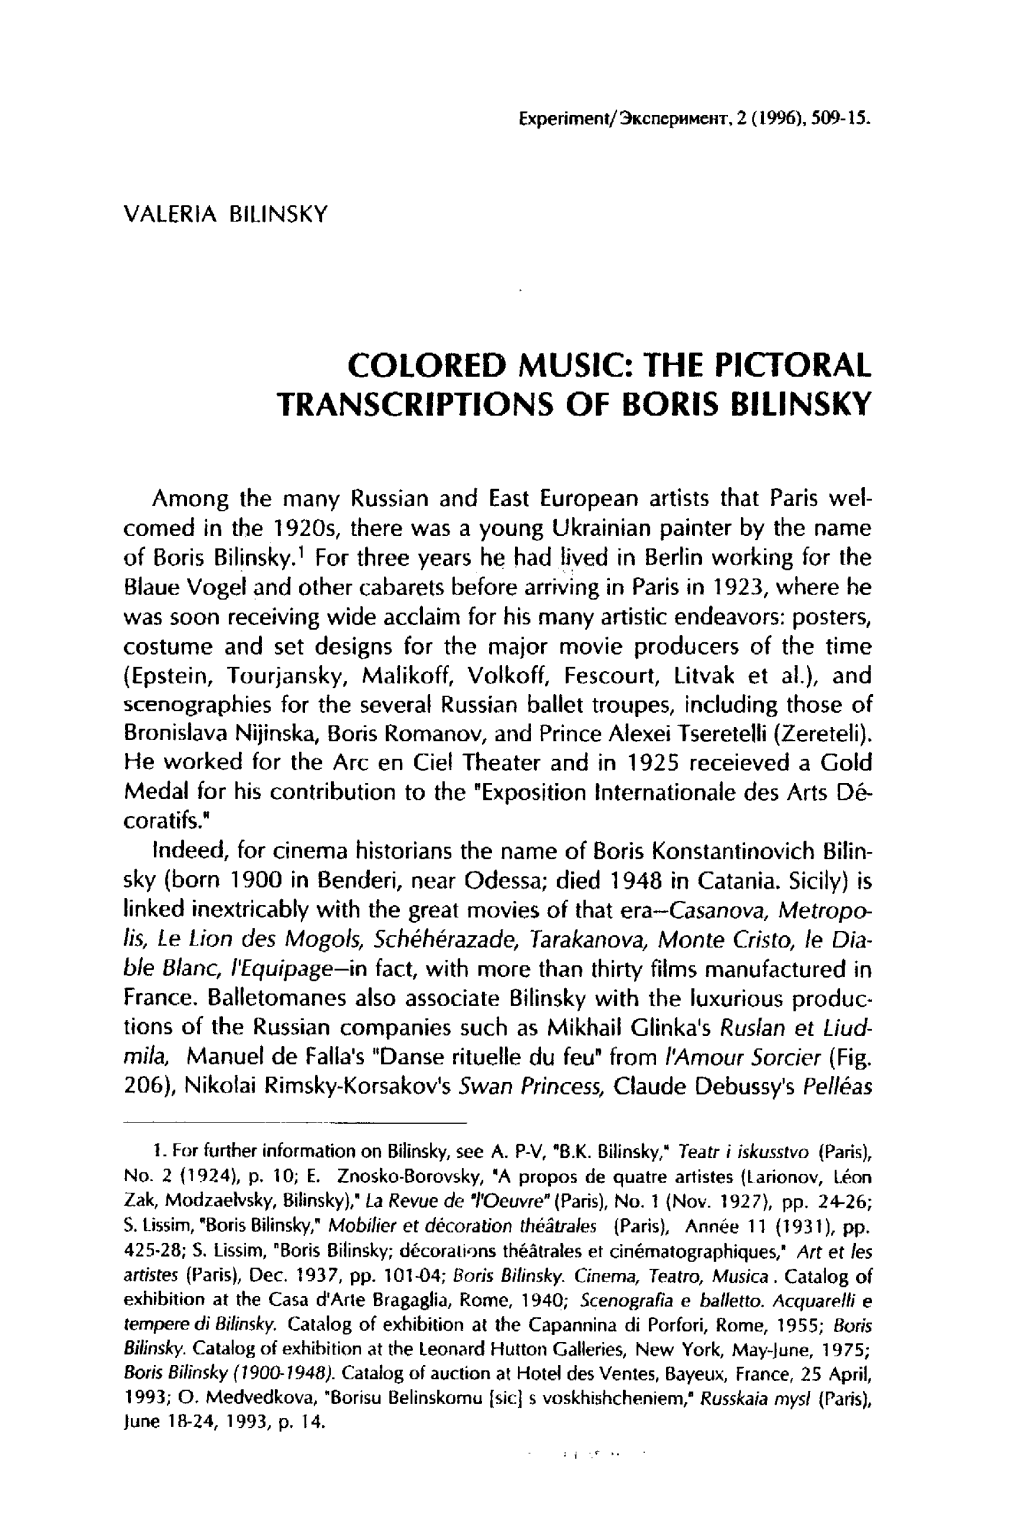 The Pictoral Transcriptions of Boris Bilinsky